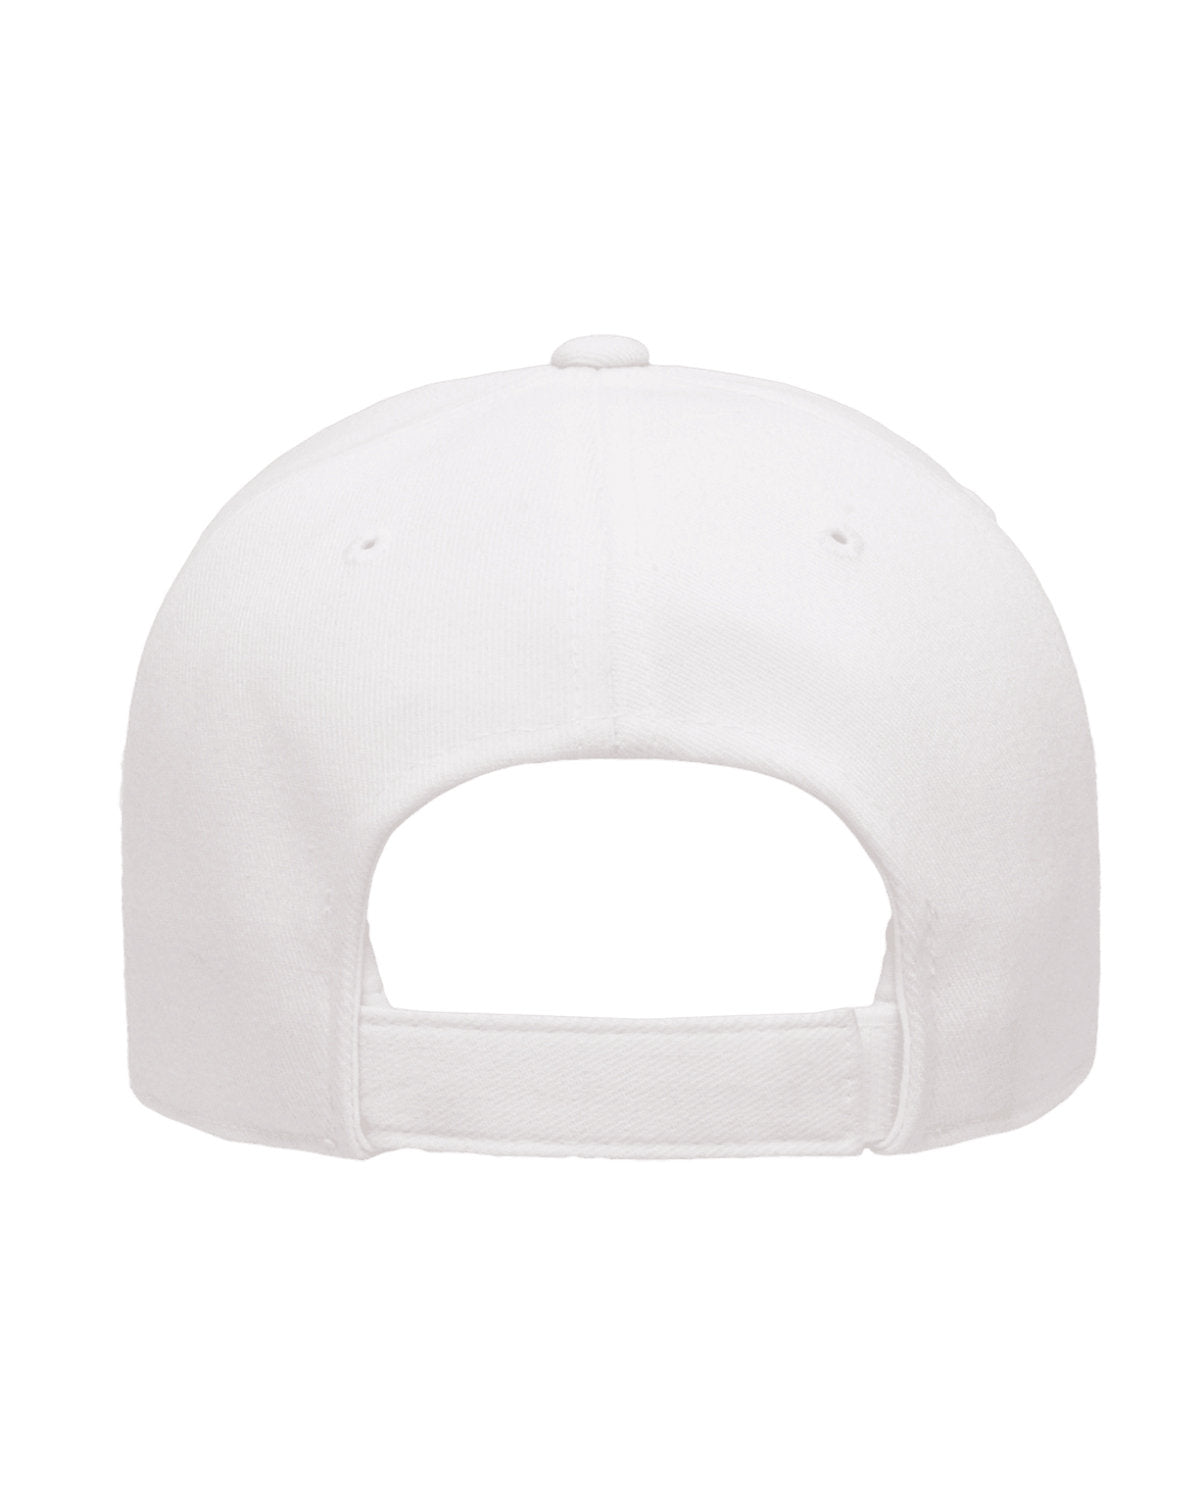 Yupoong Brushed Cotton Twill Custom Mid-Profile Caps, White